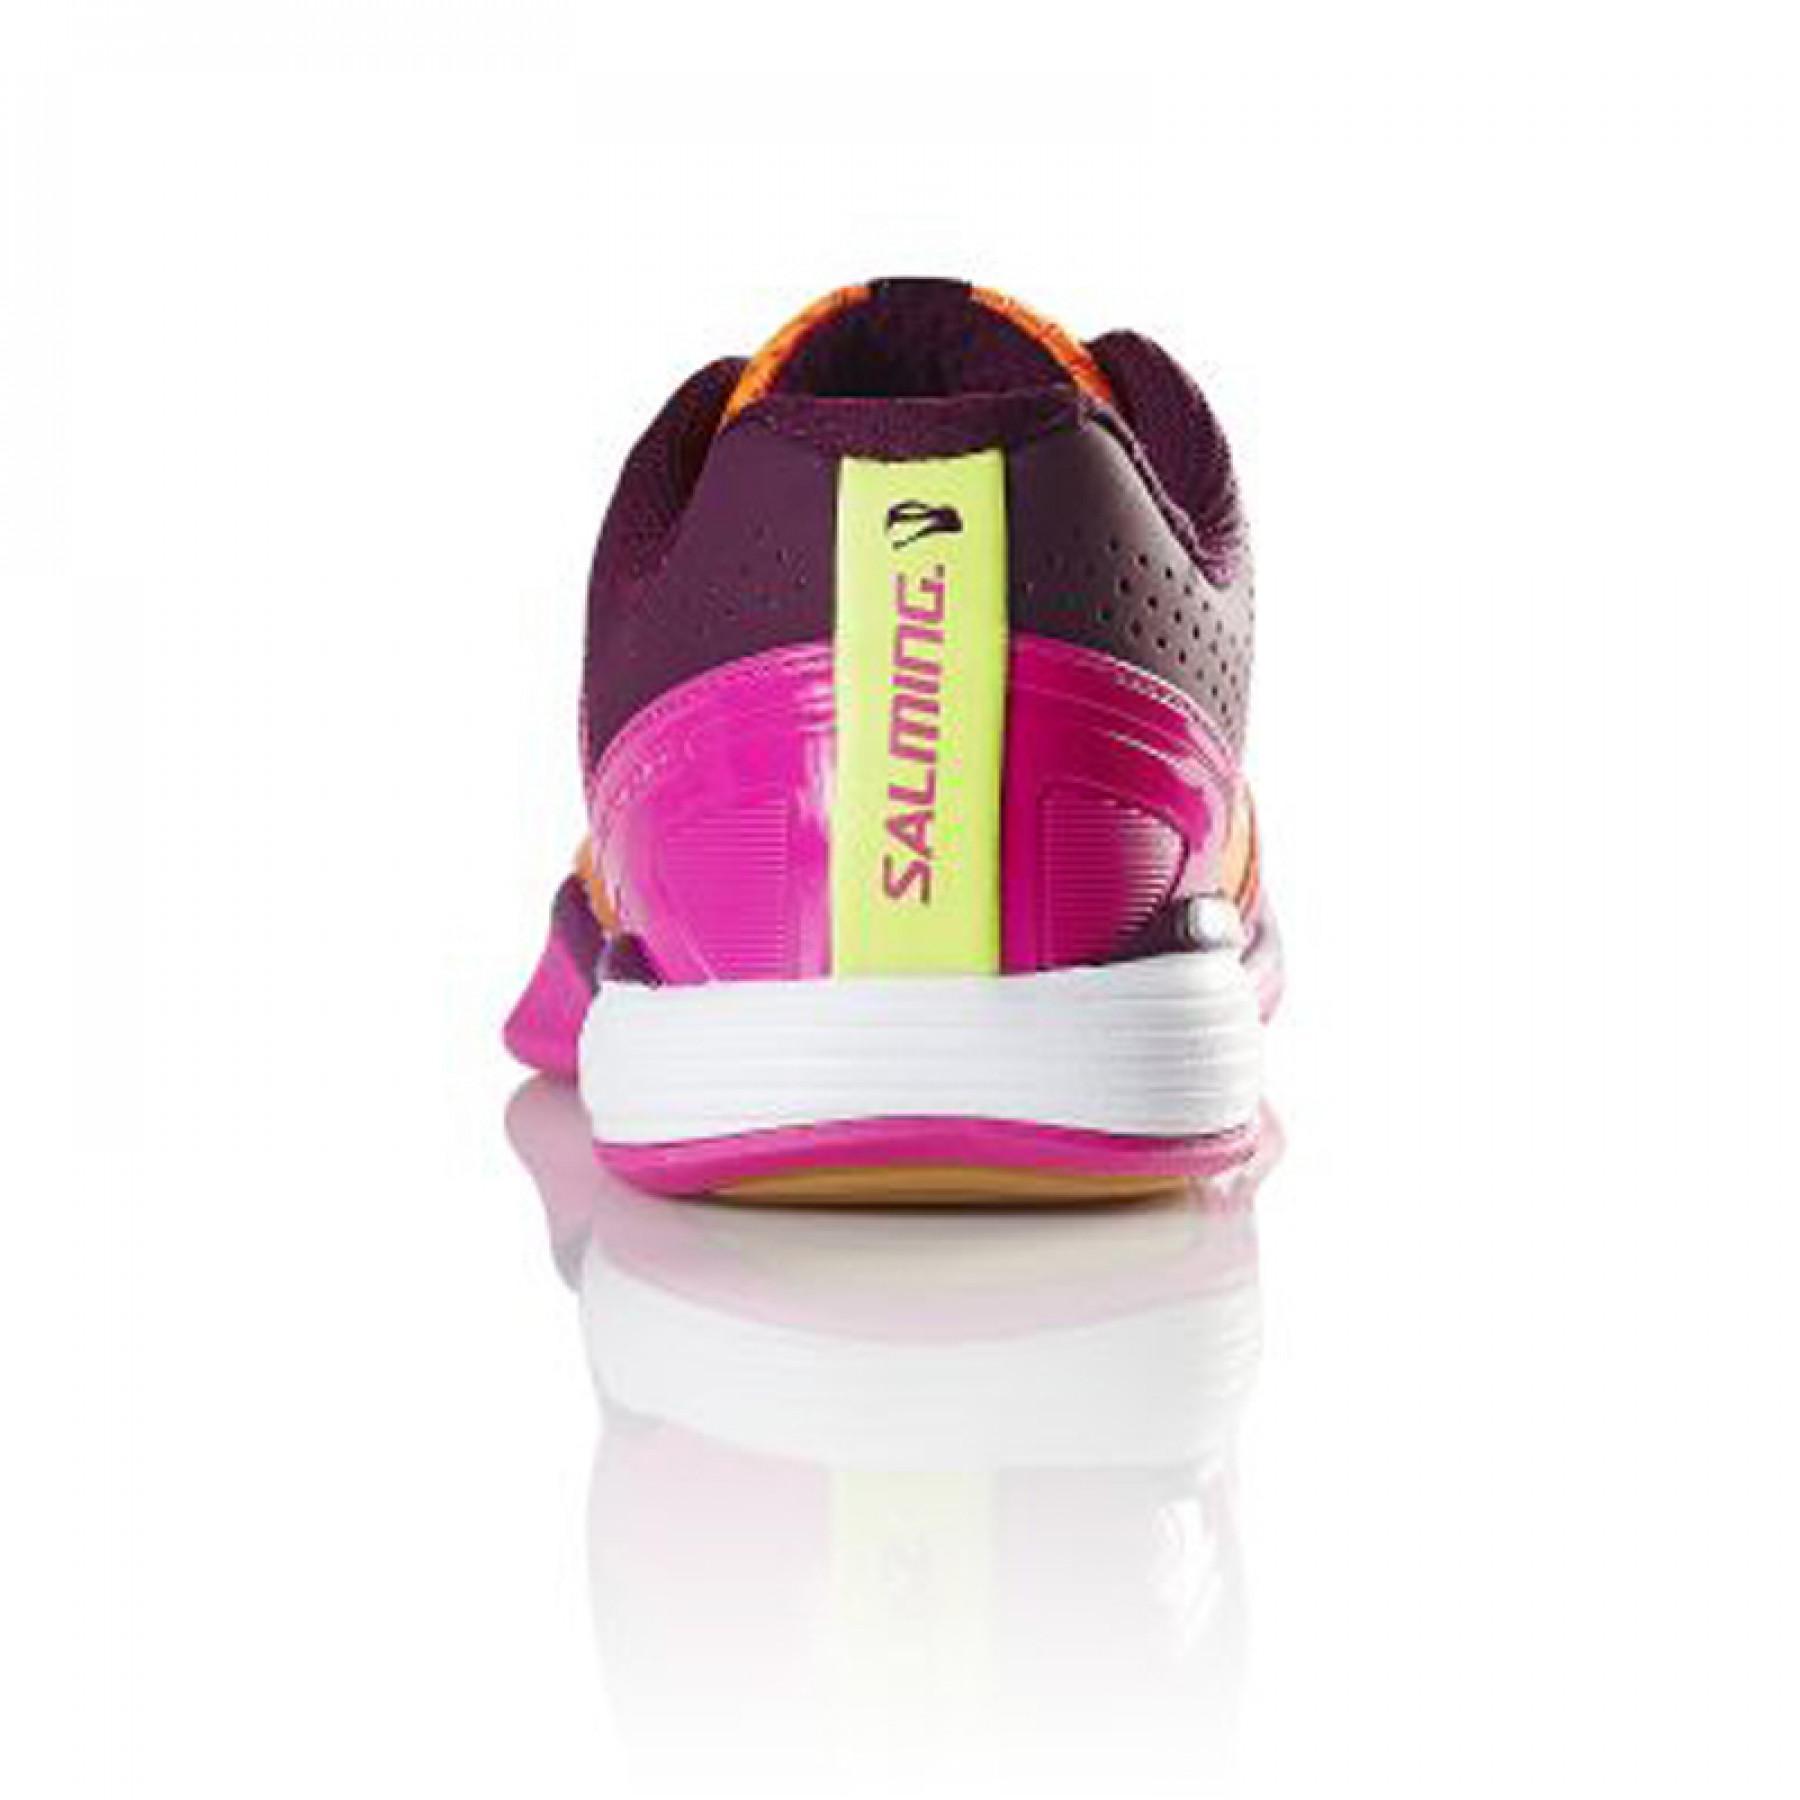 Women's shoes Salming Viper 4